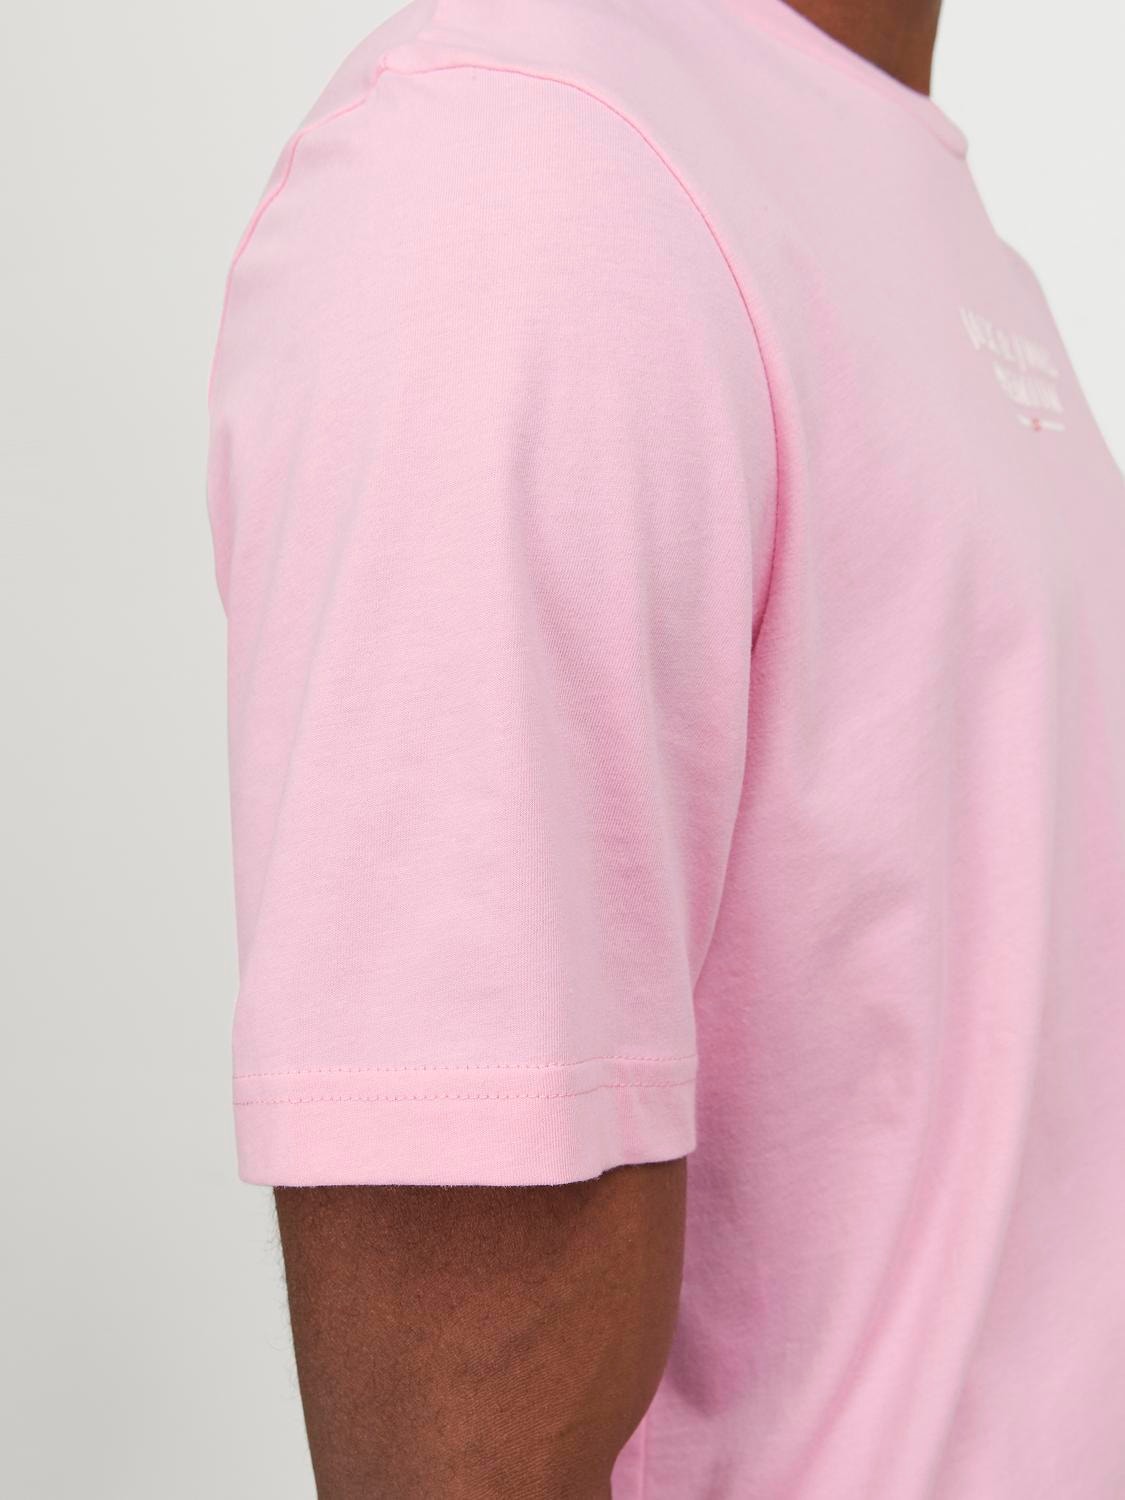 Jack & Jones Z logo Okrągły dekolt T-shirt -Prism Pink - 12217167